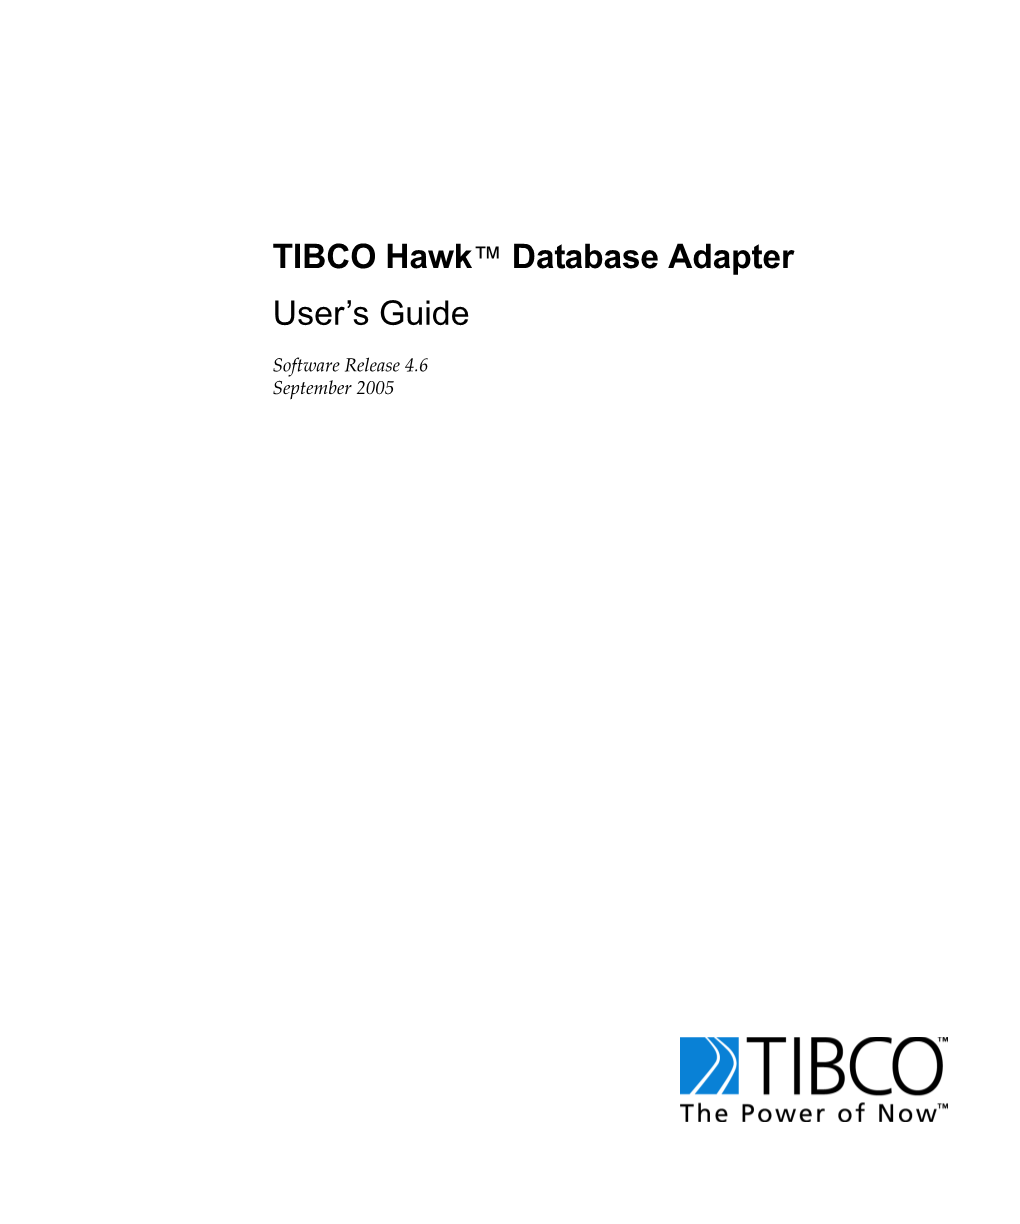 TIBCO Hawk™ Database Adapter User's Guide